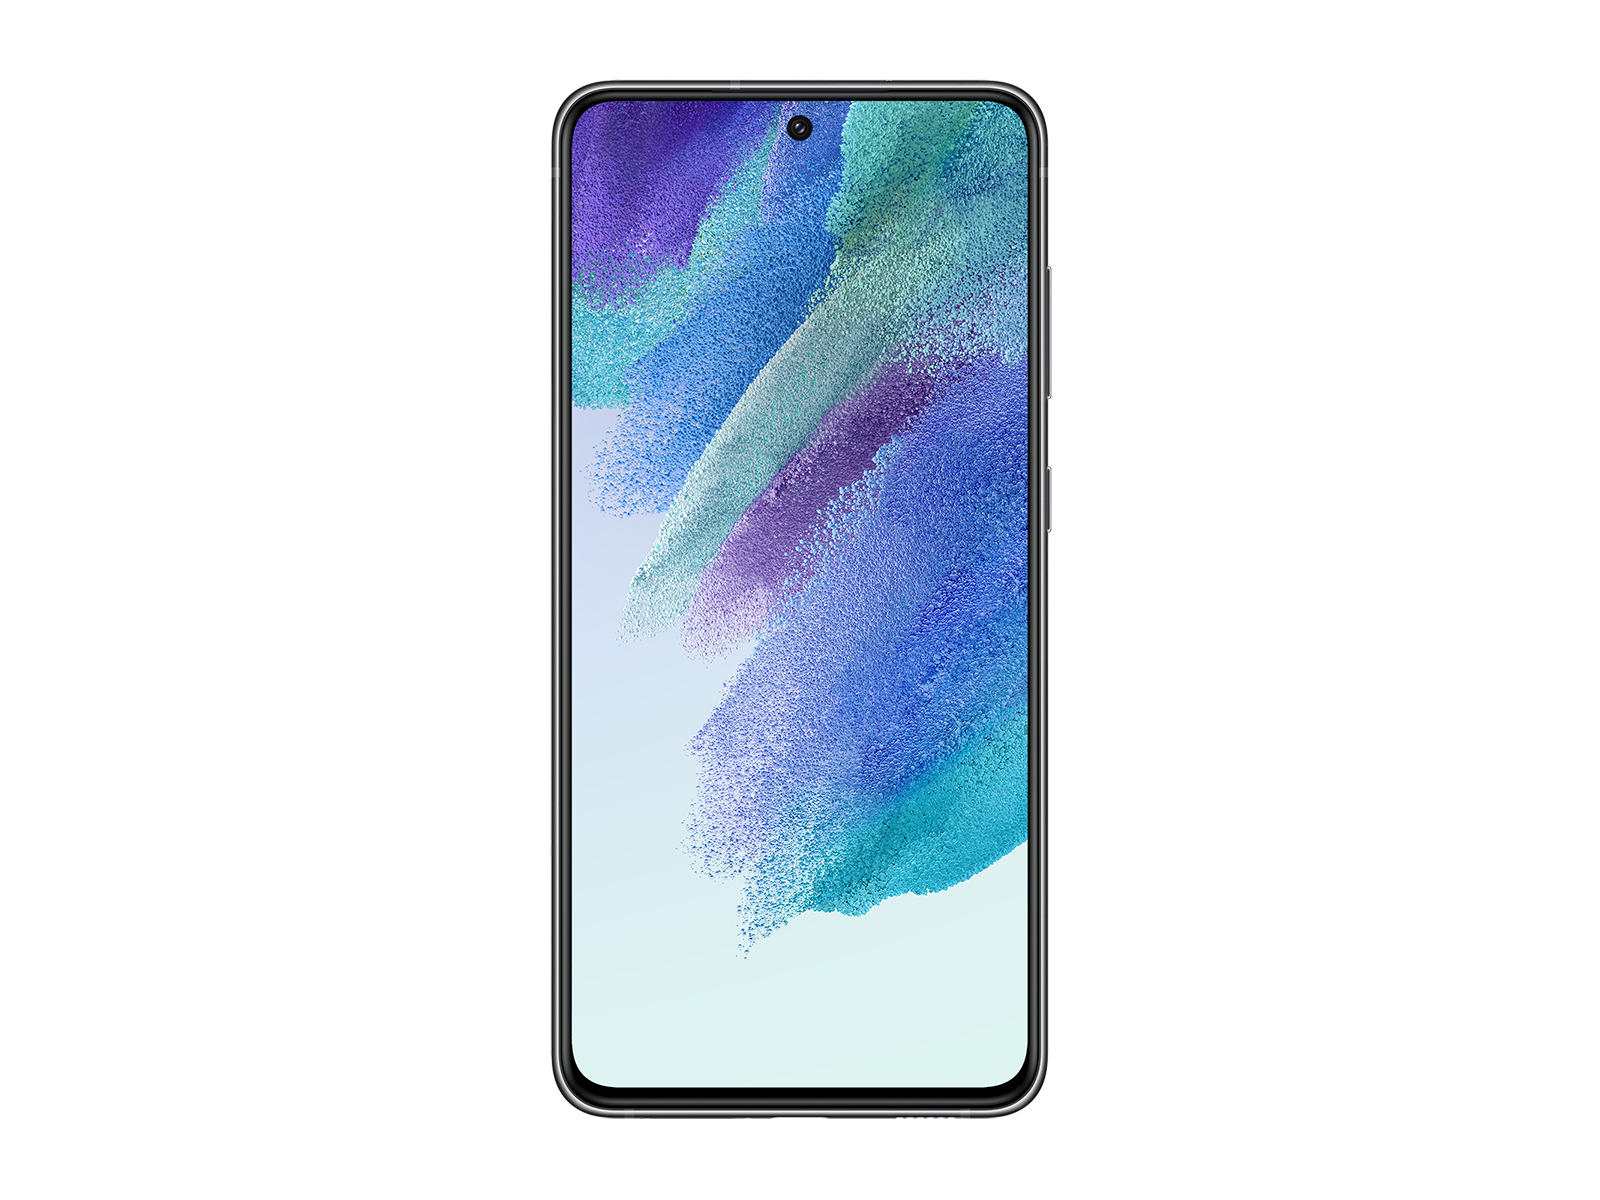 Thumbnail image of Galaxy S21 FE 5G, 128GB (U.S. Cellular)